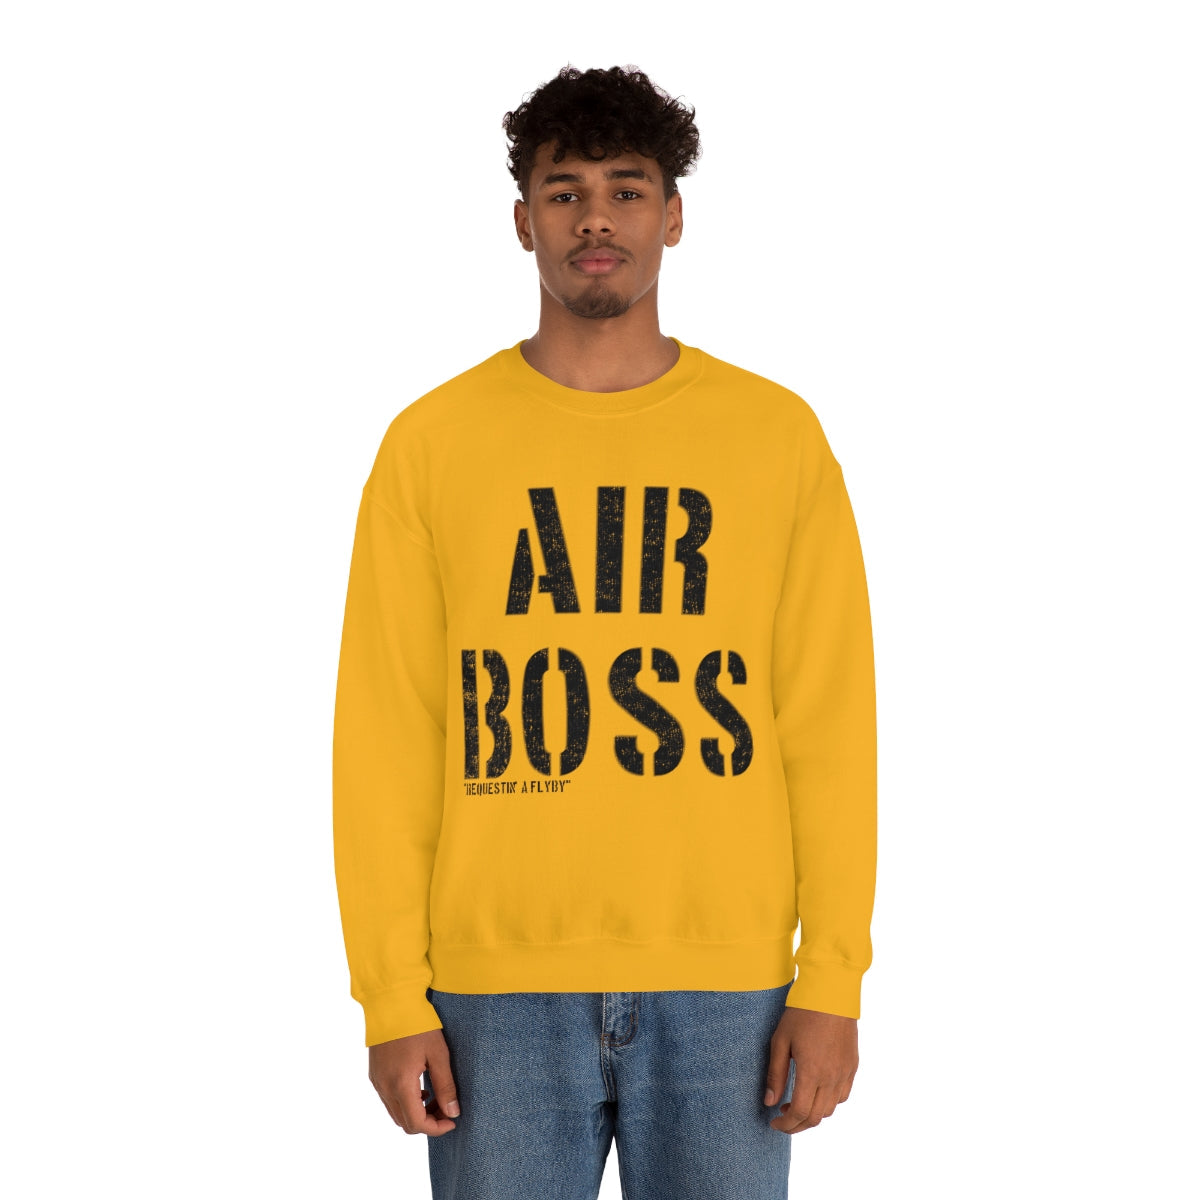 AIR BOSS "Requestin' a flyby", Top Gun | Classic Sweatshirt